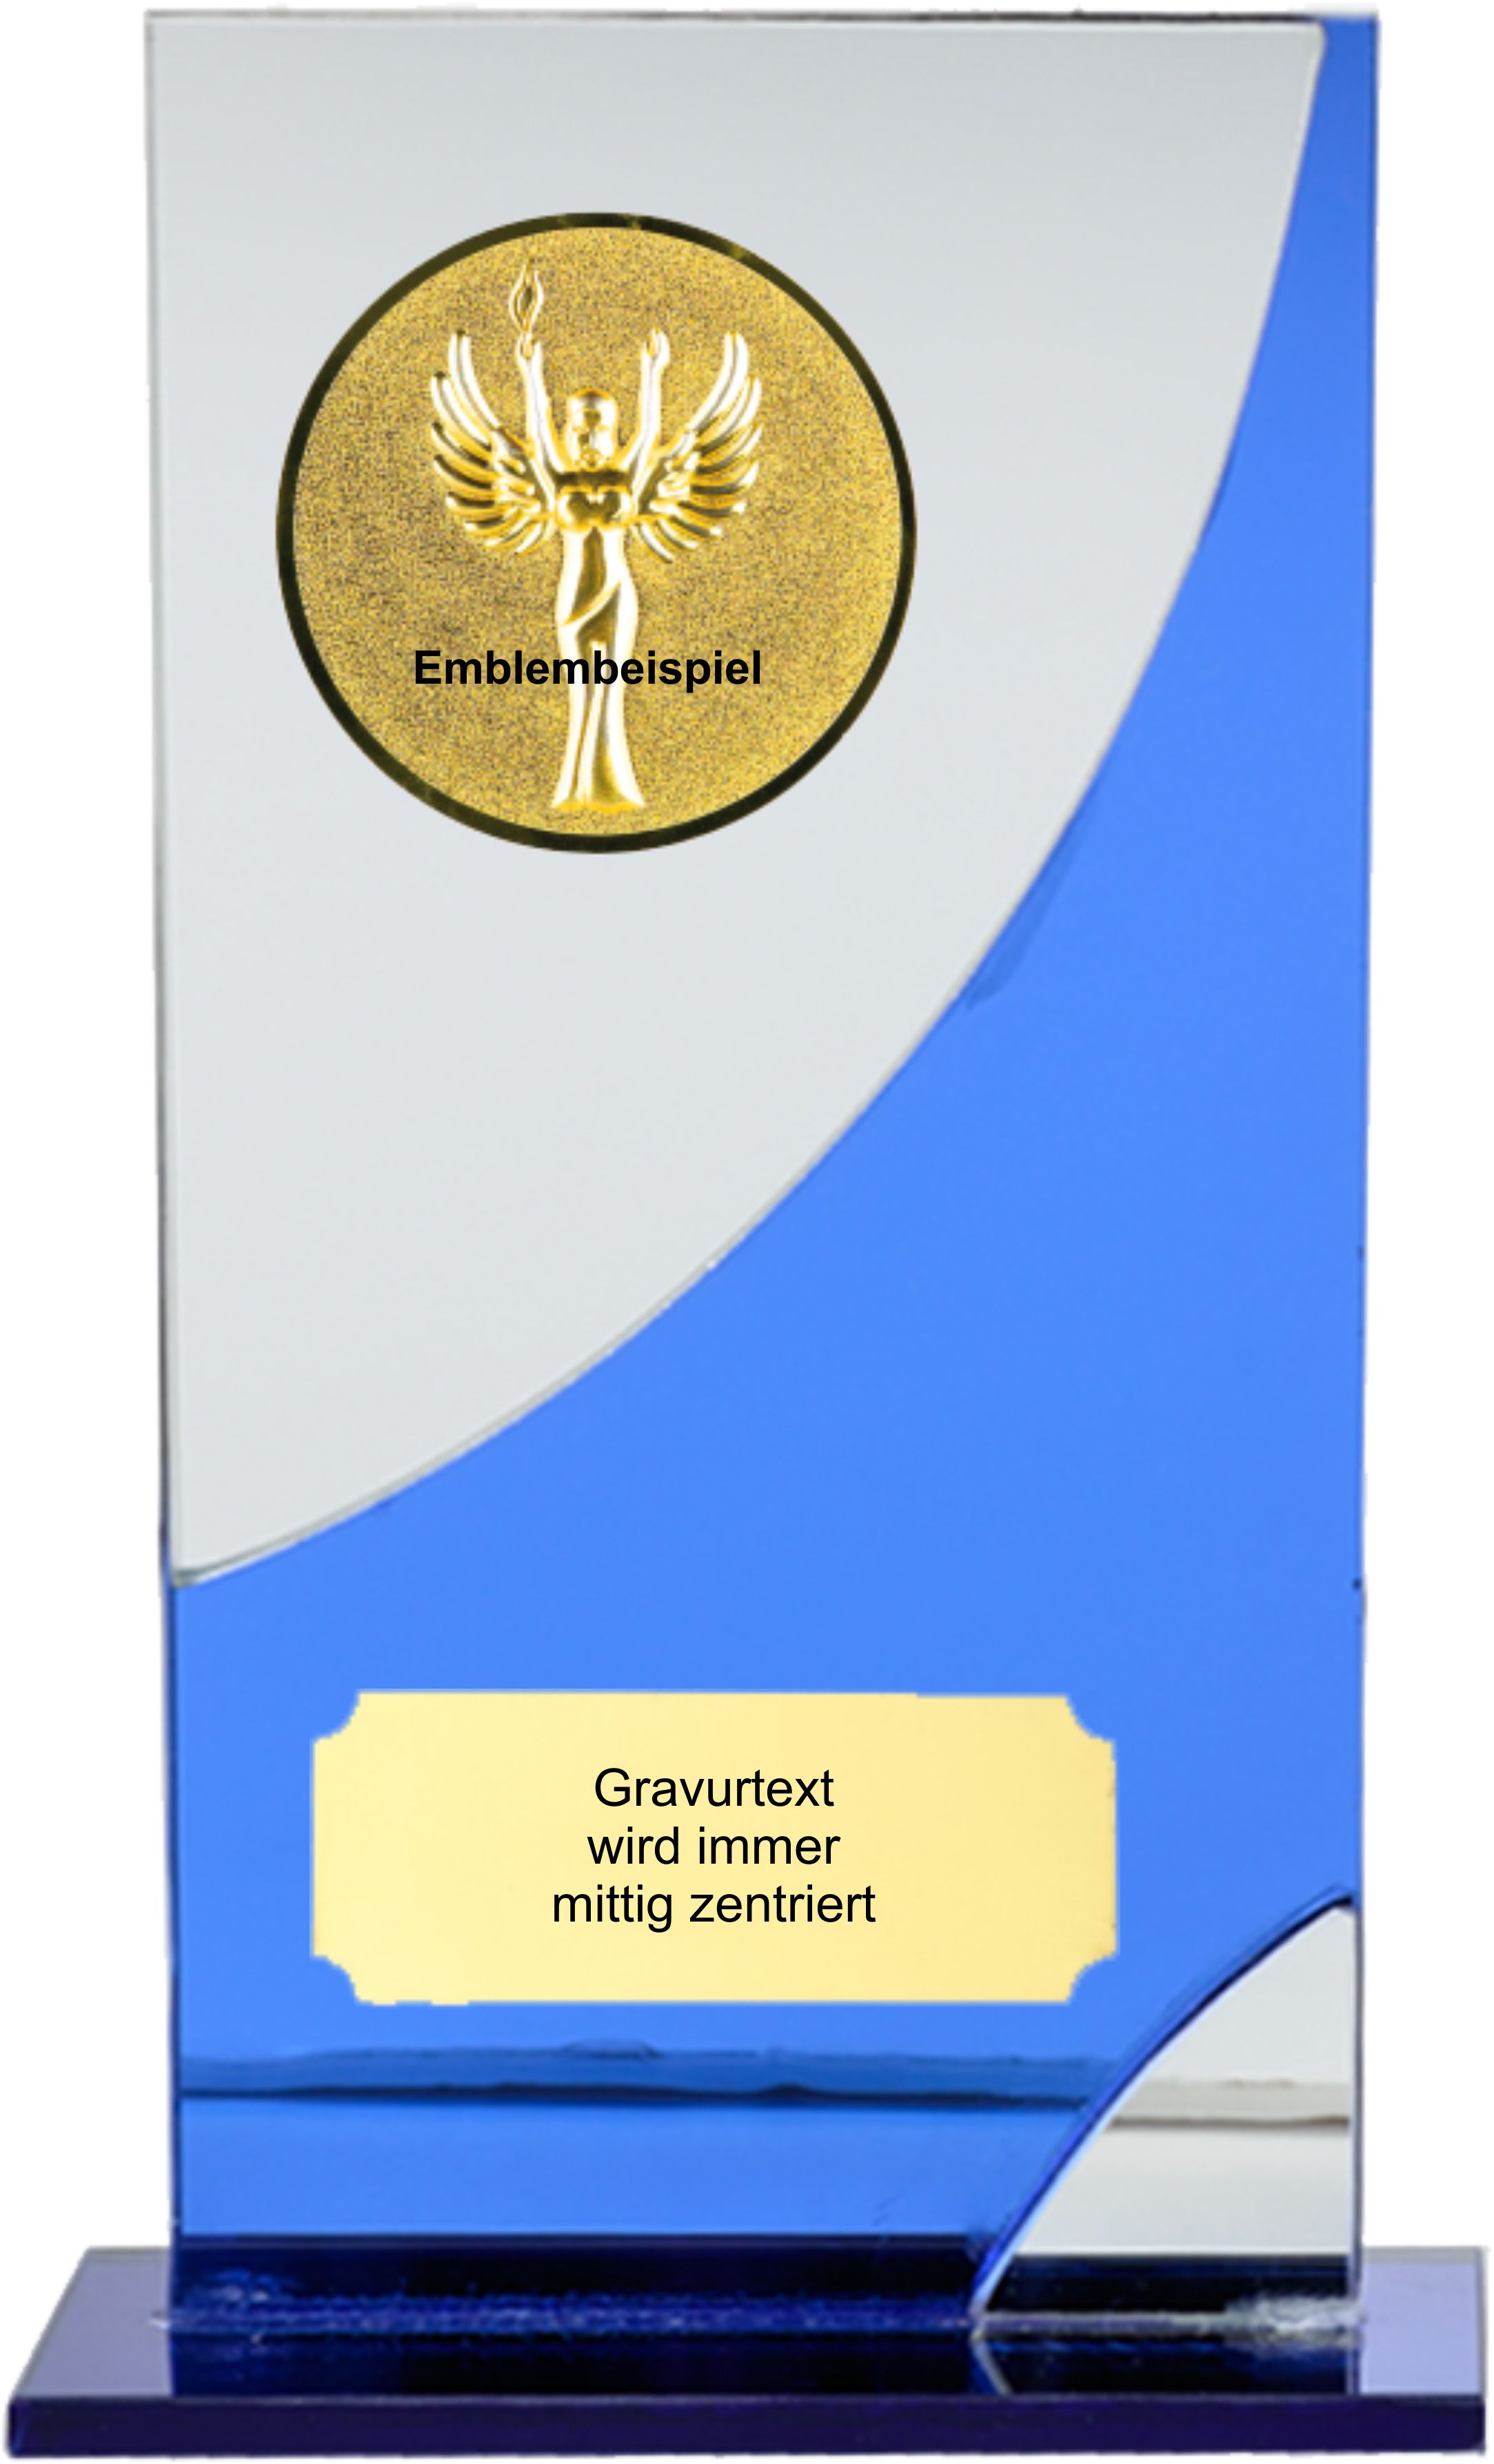 Spiegel-Glas-Pokal 147-35 inkl. Emblem und Gravur #1 22 cm 